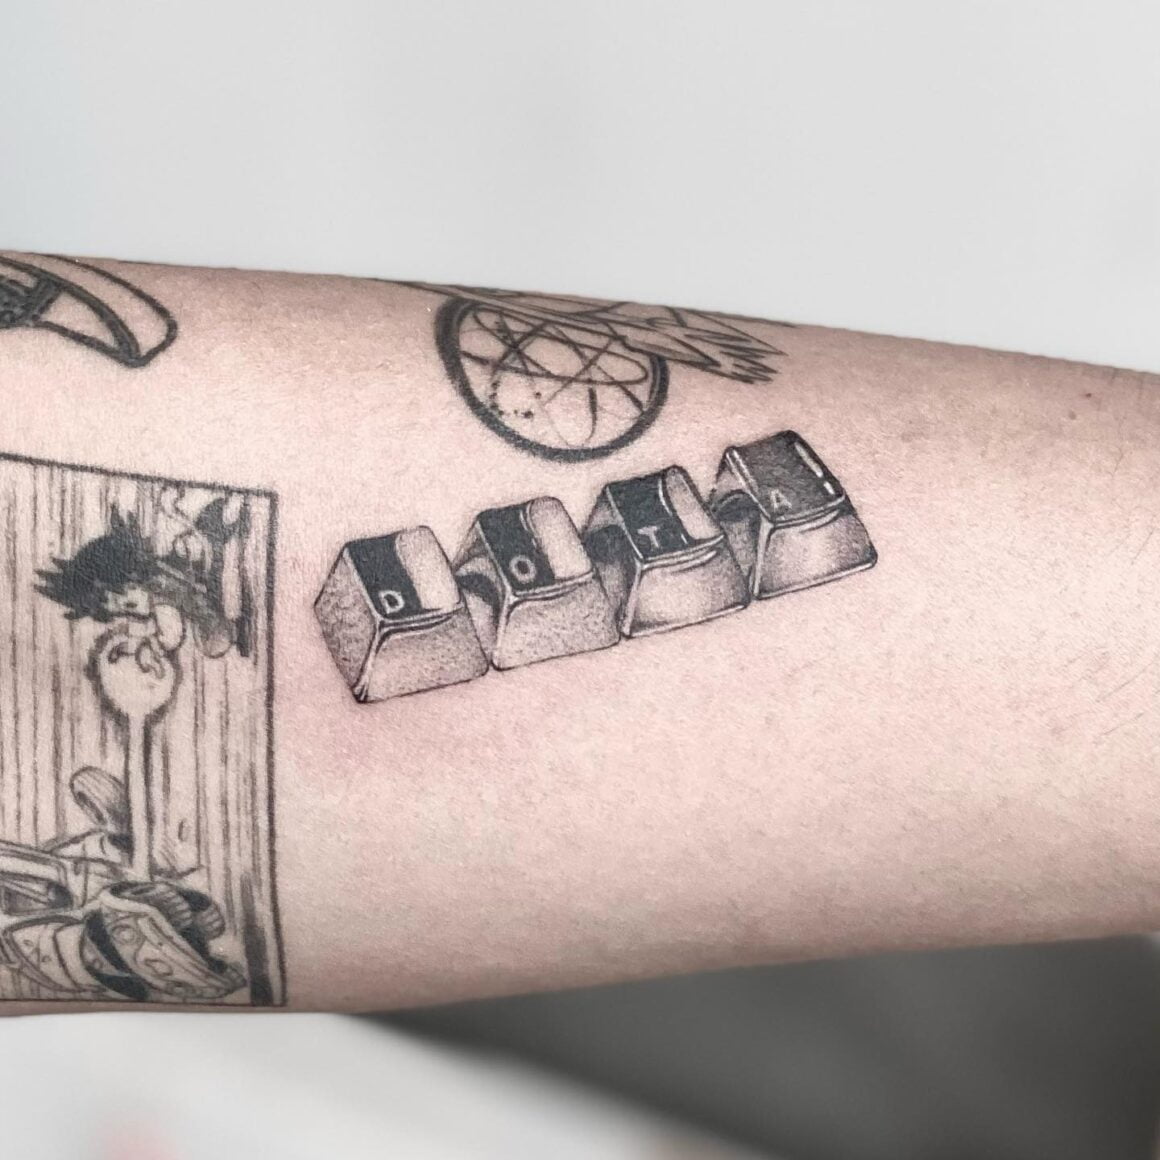 Tattoo uploaded by DonPirate • Piano Keys on the wrist. • Tattoodo